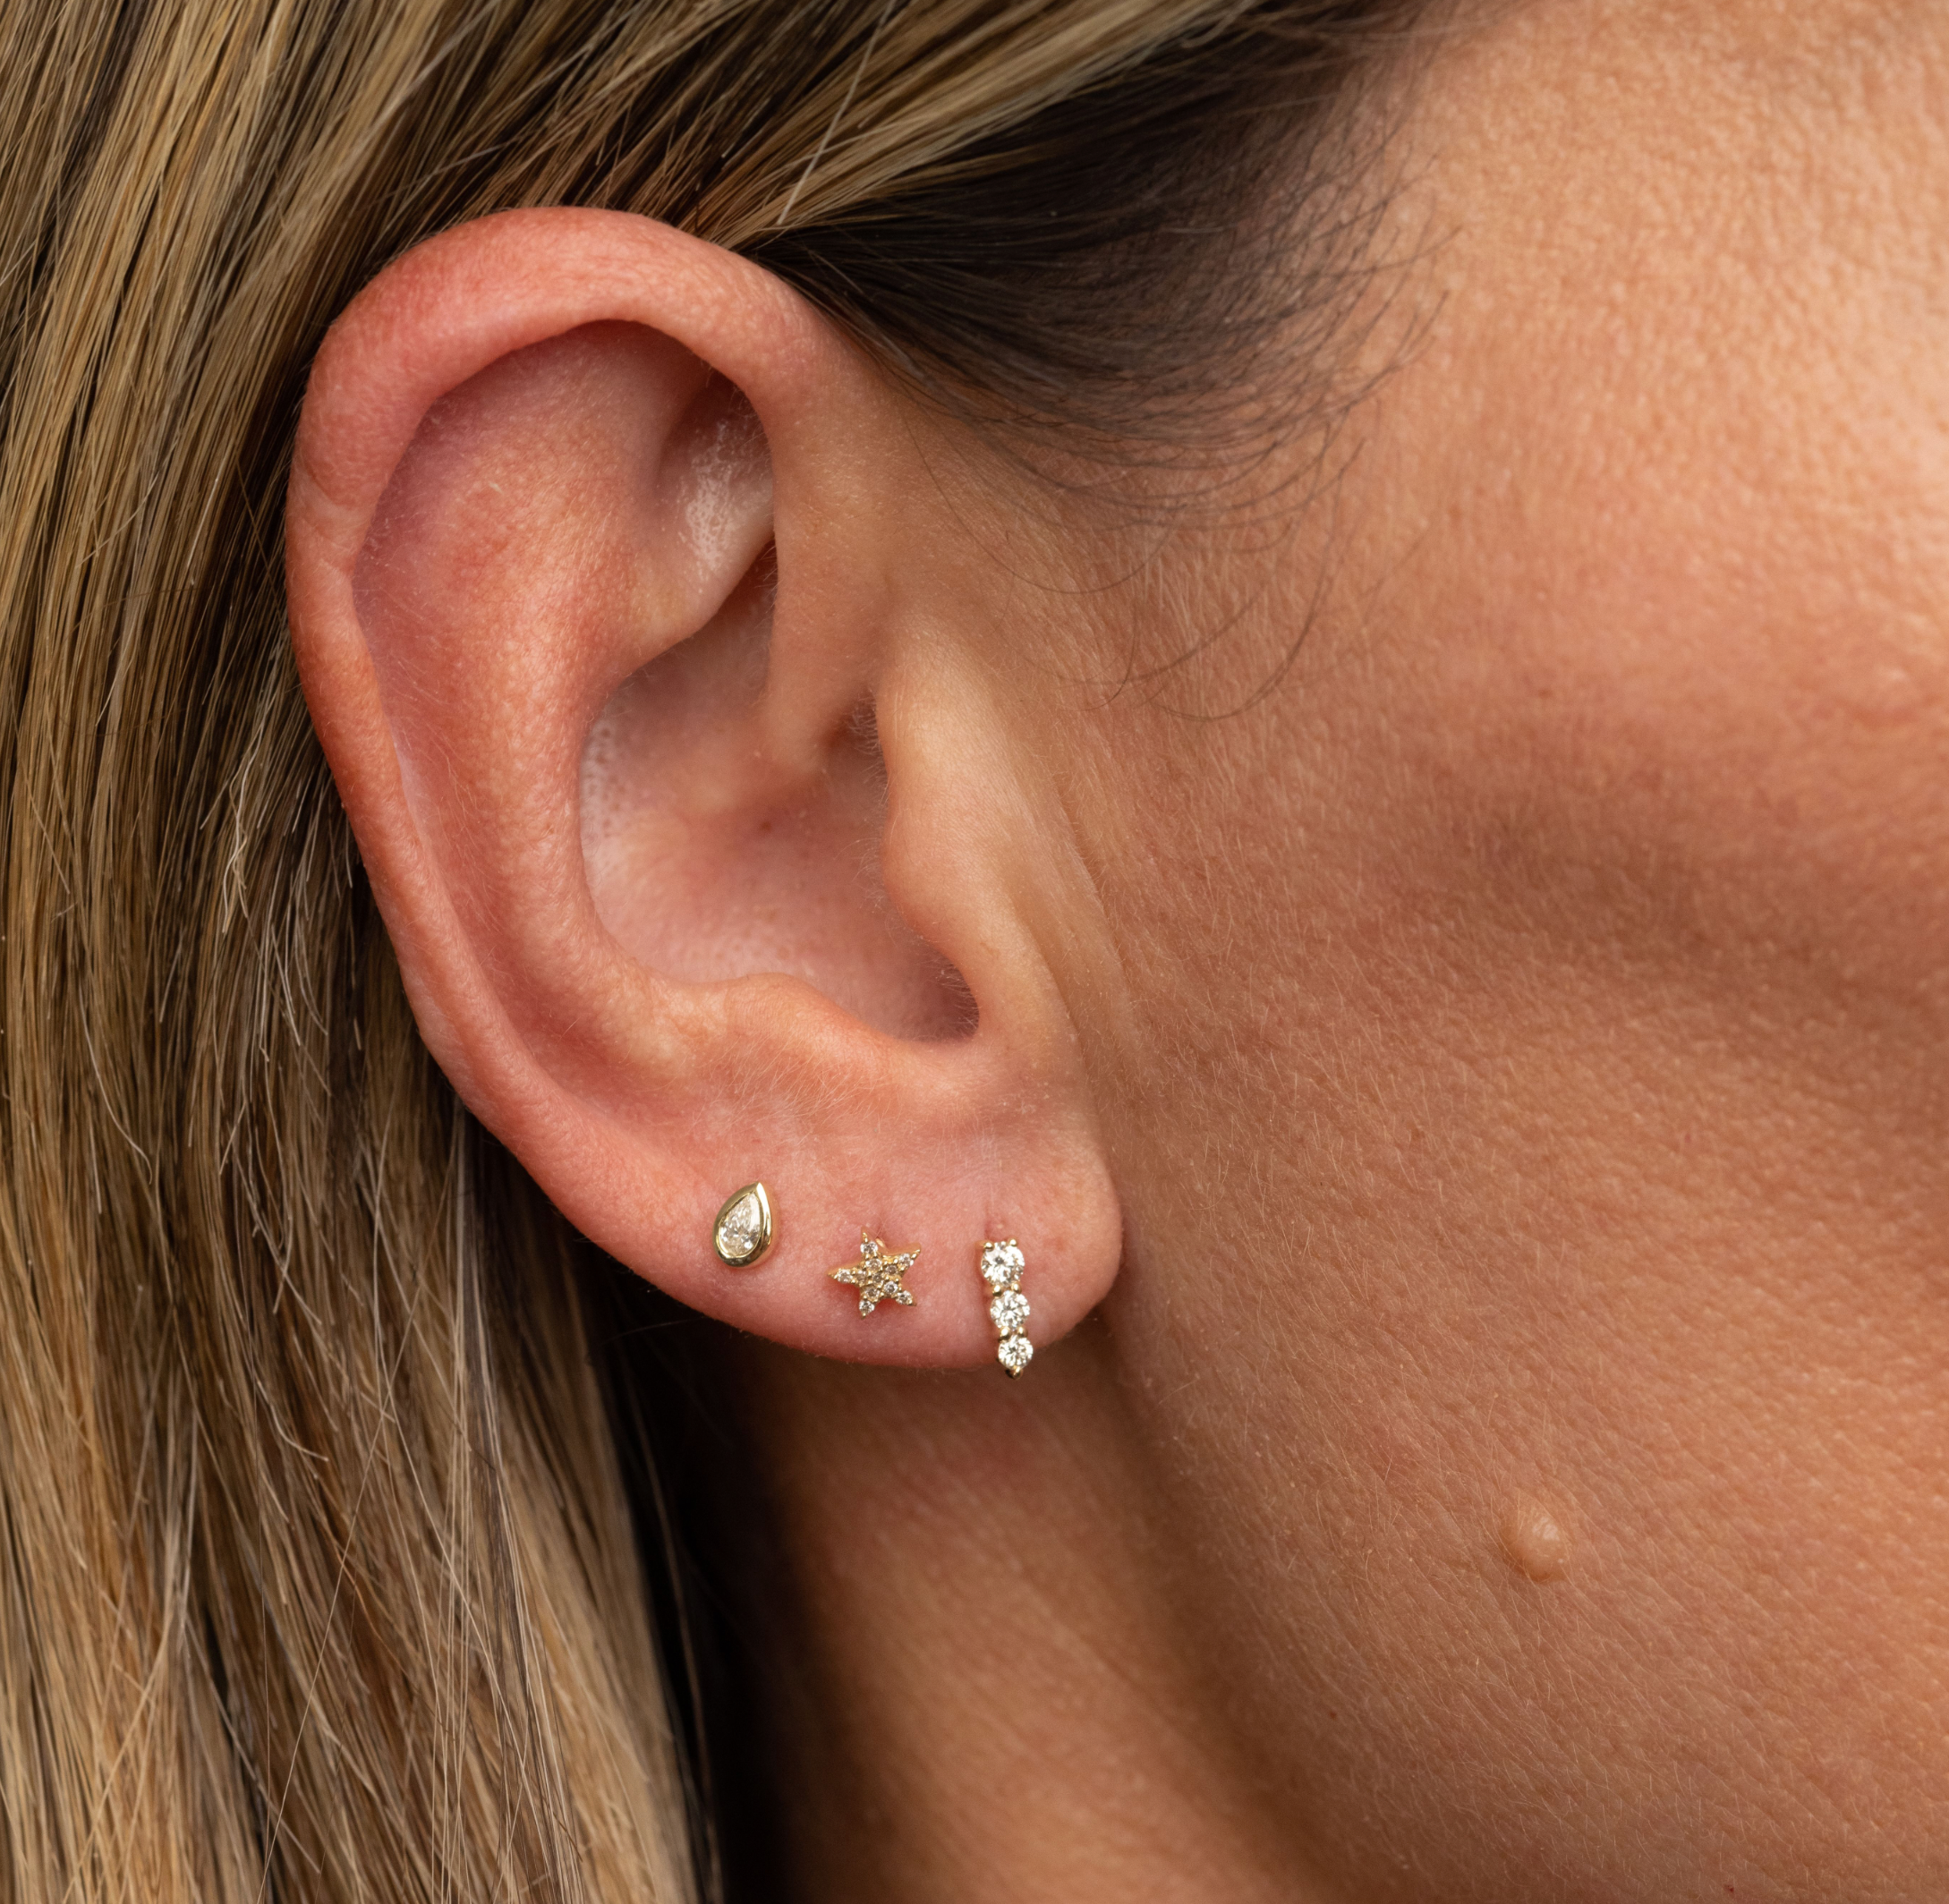 Stud Earrings Flat Back Piercing Clear Gem Tragus Helix Cartilage Labret 6  8 4mm | eBay